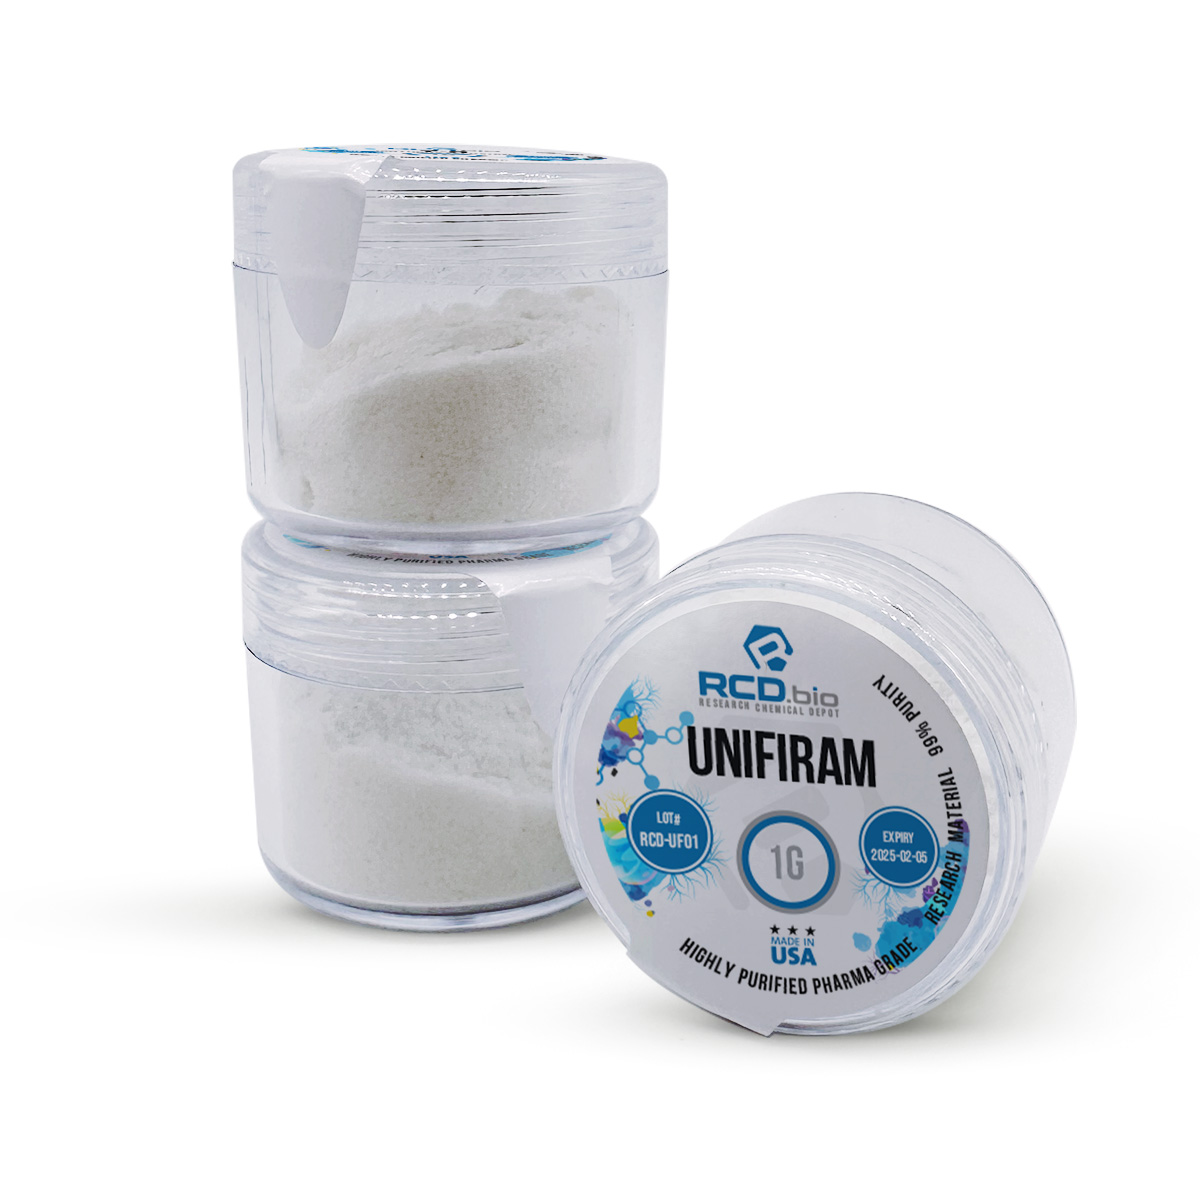 Unifiram Powder For Sale | Fast Shipping | RCD.bio